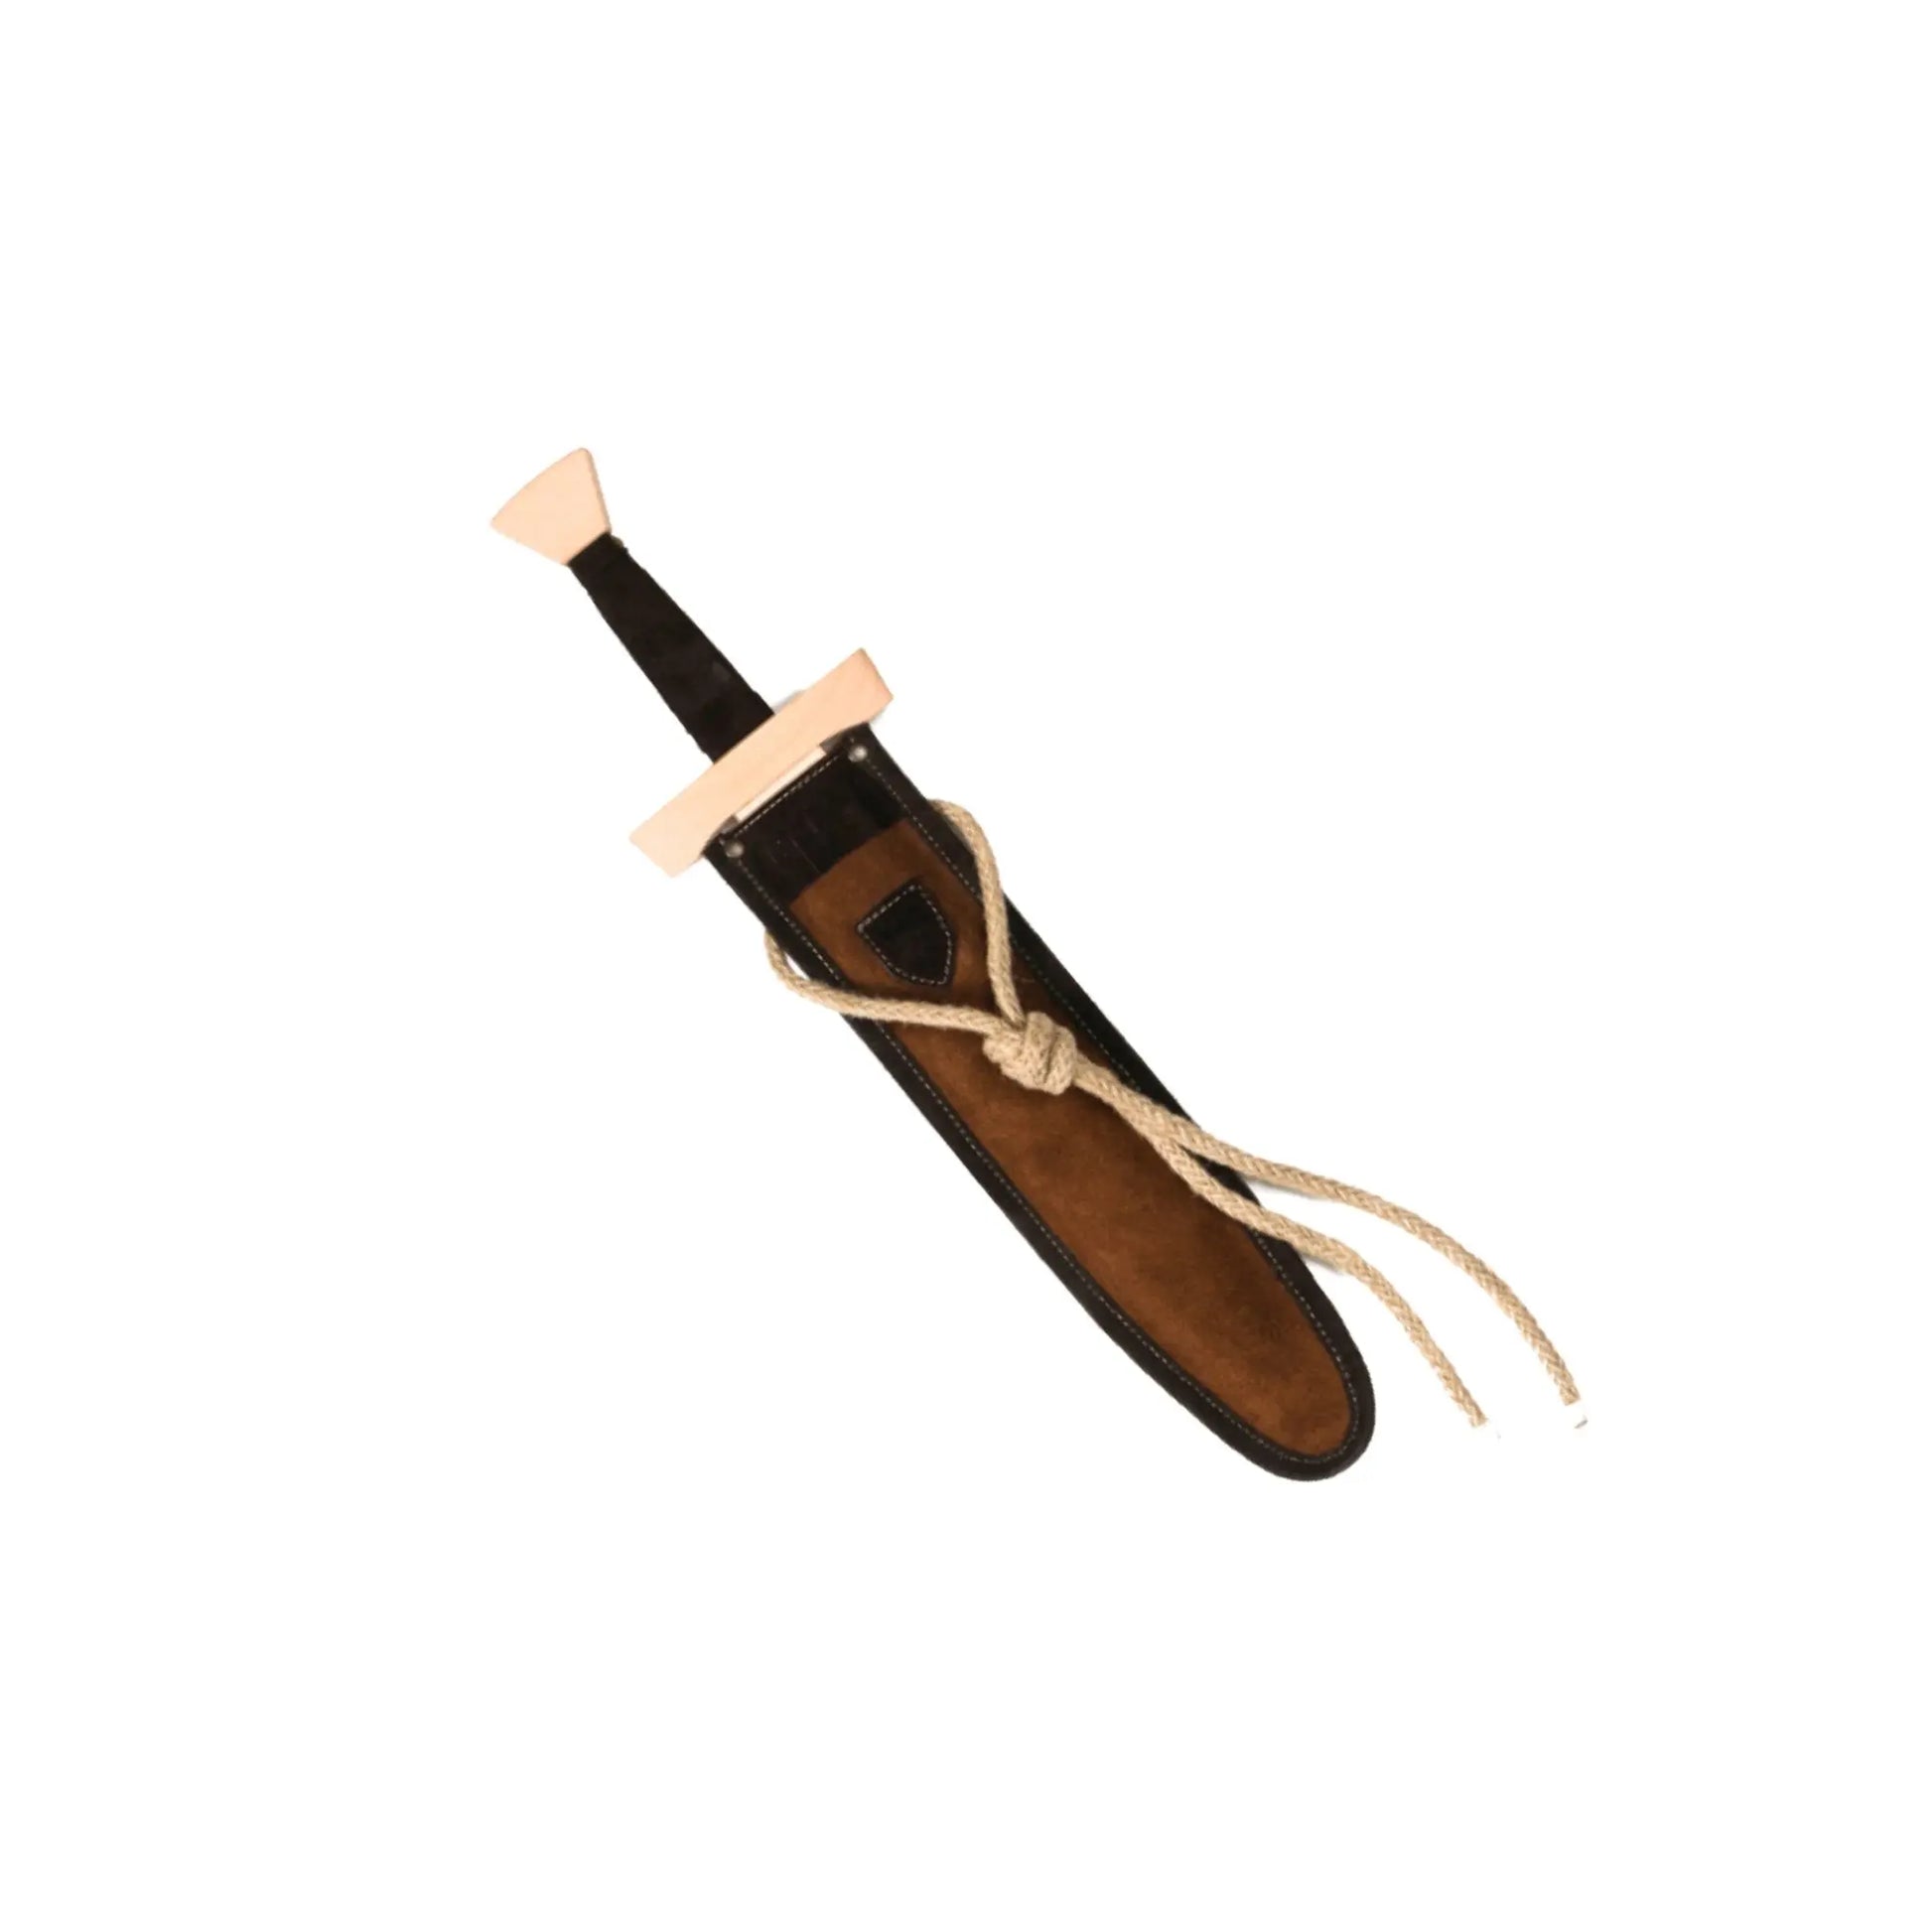 Fantashion Play Sword, Solid Wood, Leather -  Alder & Alouette